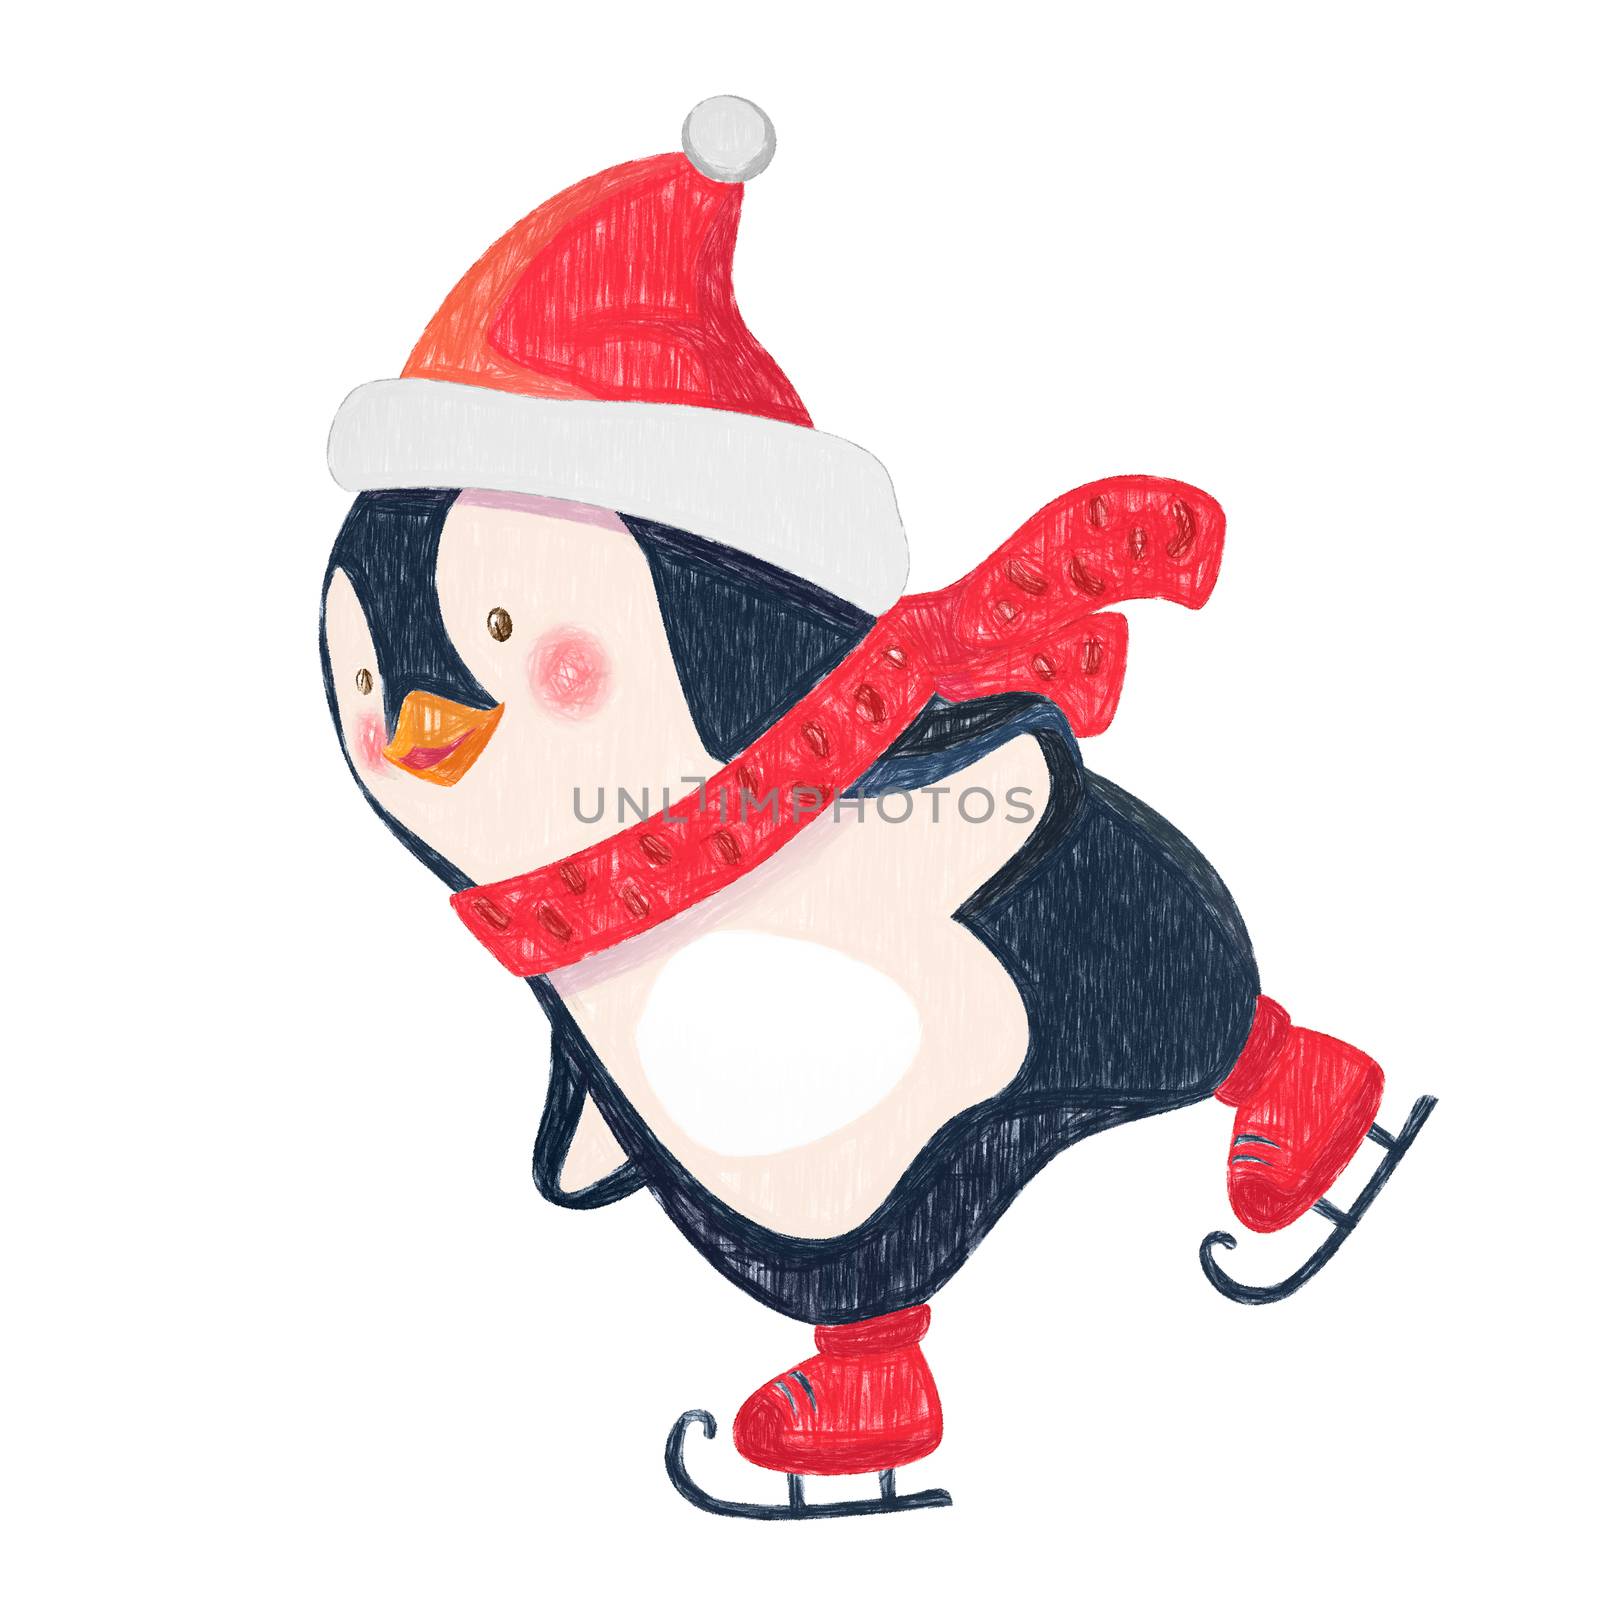 Penguin cartoon. Penguin ice skates on ice skating rink in the winter illustration.